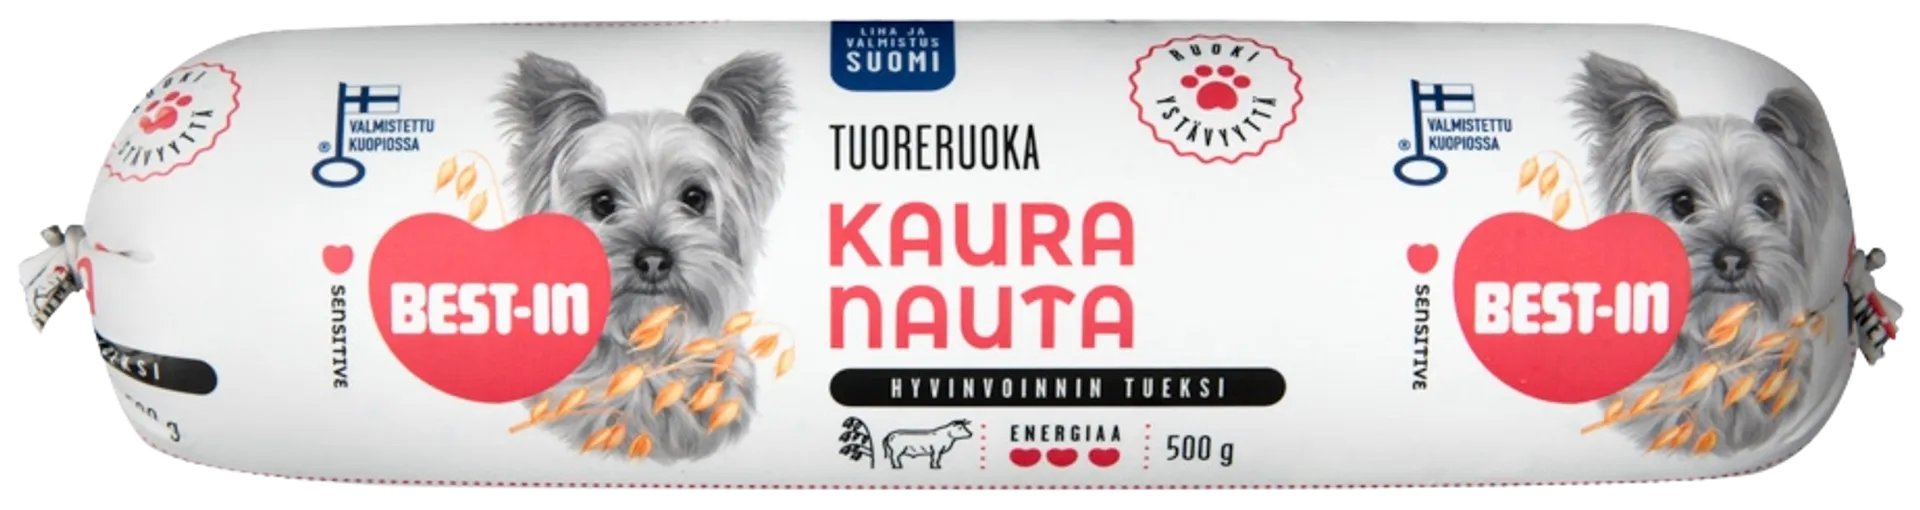 Best-In Kaura-Nauta Koiran Tuoreruoka 500g - 1